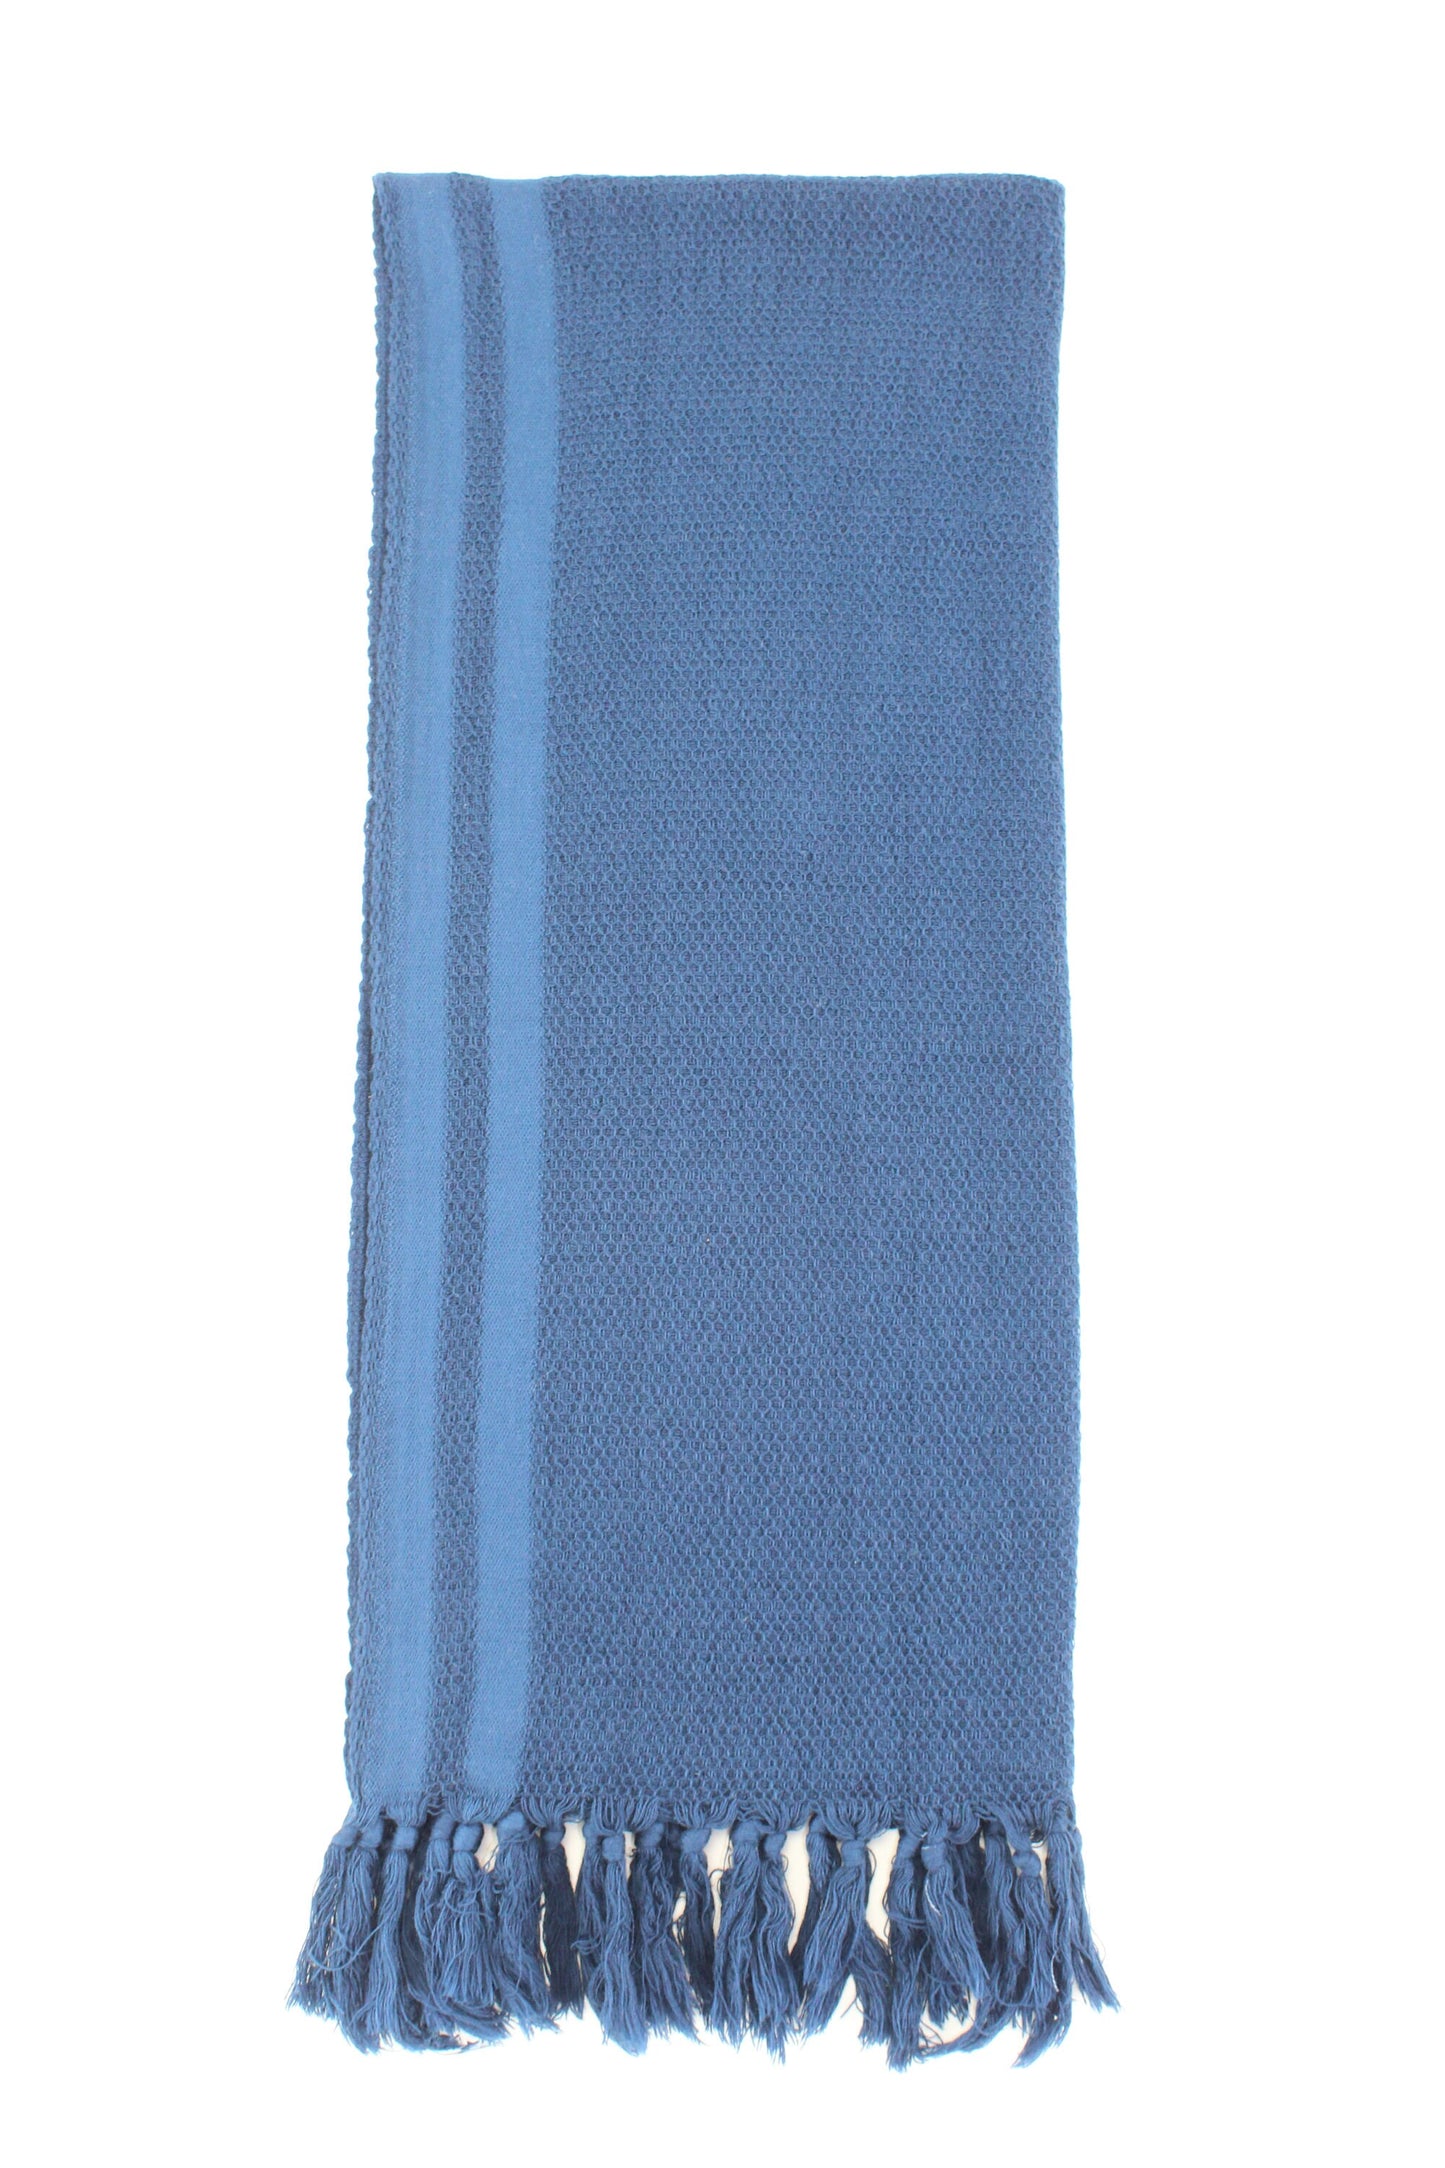 Premium Turkish Towel Peshtemal Fouta (Dark Navy Blue)